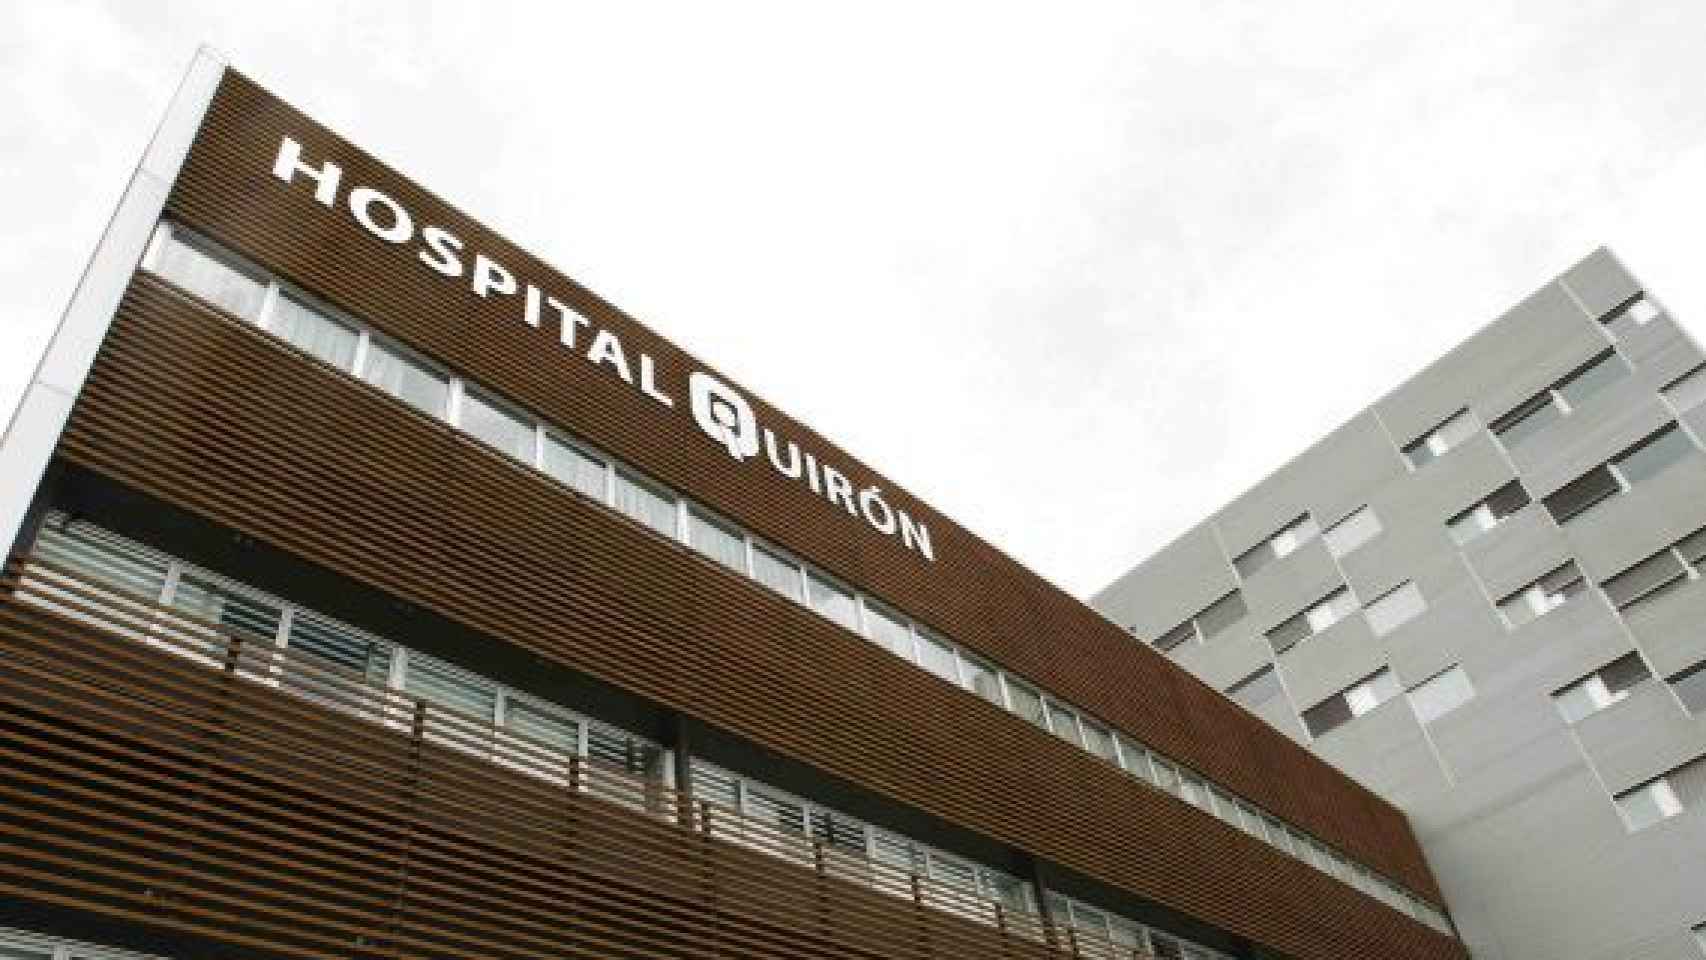 Imagen de un hospital Quirón.